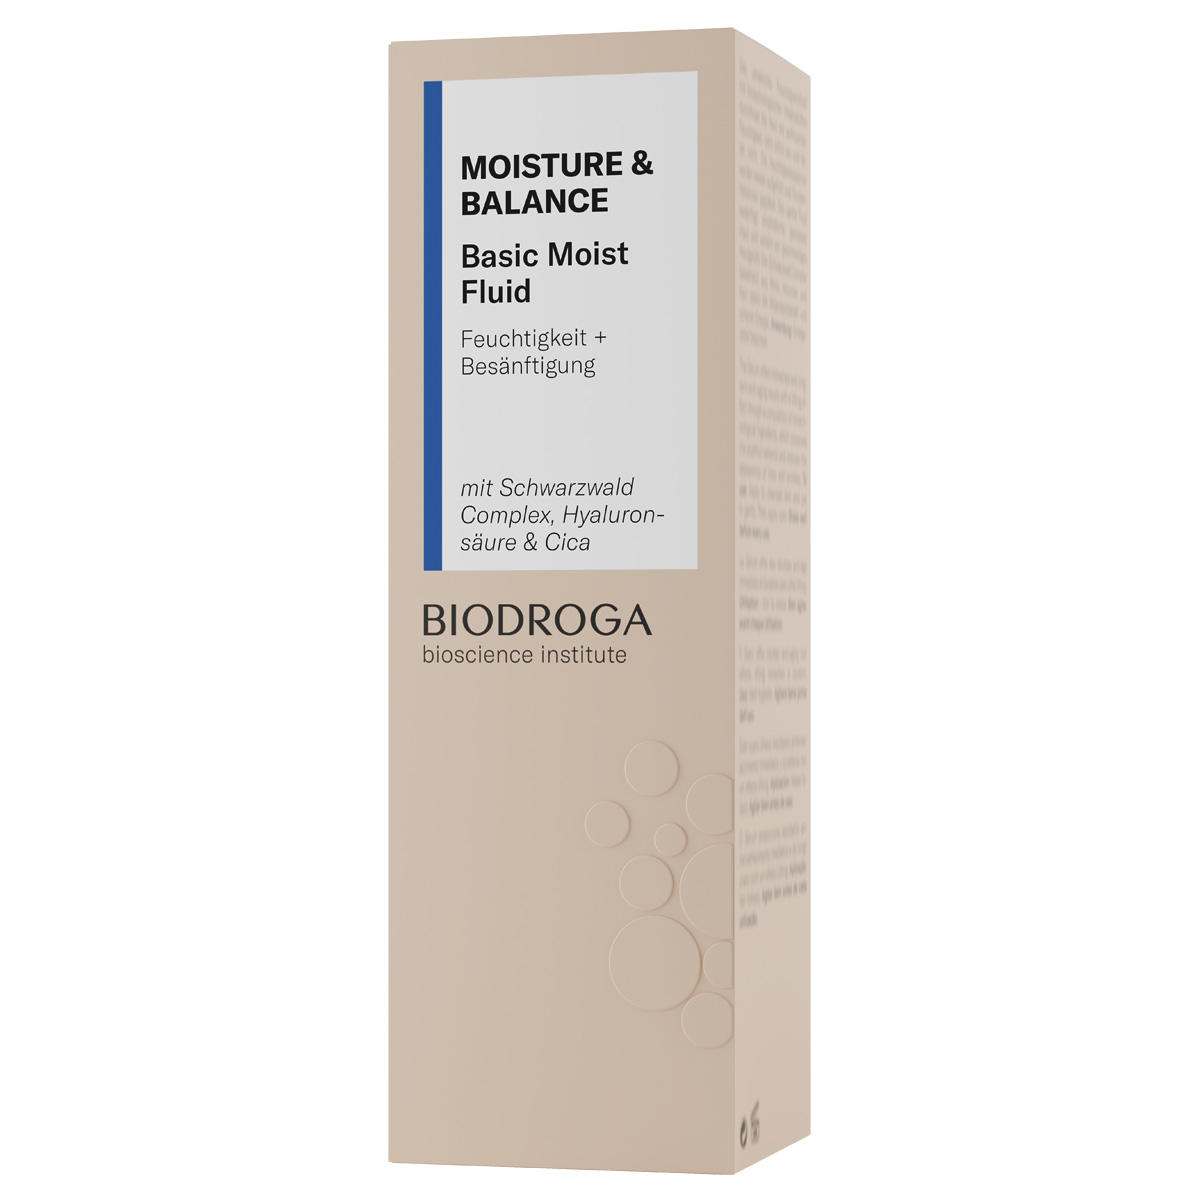 BIODROGA Bioscience Institute MOISTURE & BALANCE Basic Moist Fluid 30 ml - 2